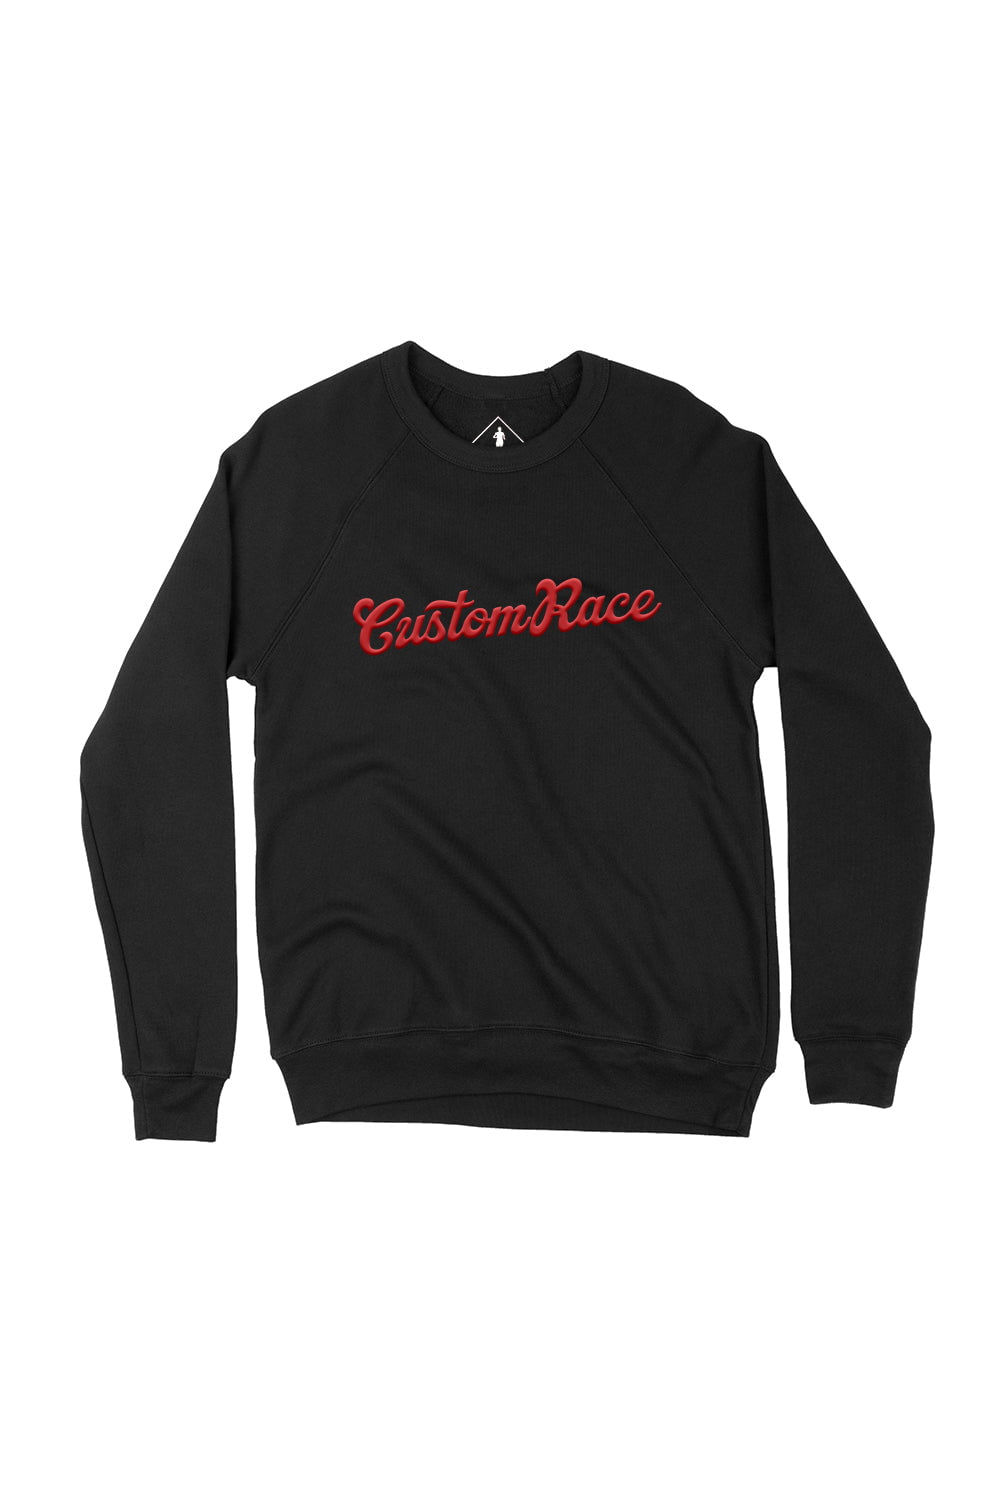 Sarah Marie Design Studio Sweatshirt XSmall / Black / Red Custom Race/City Sweatshirt